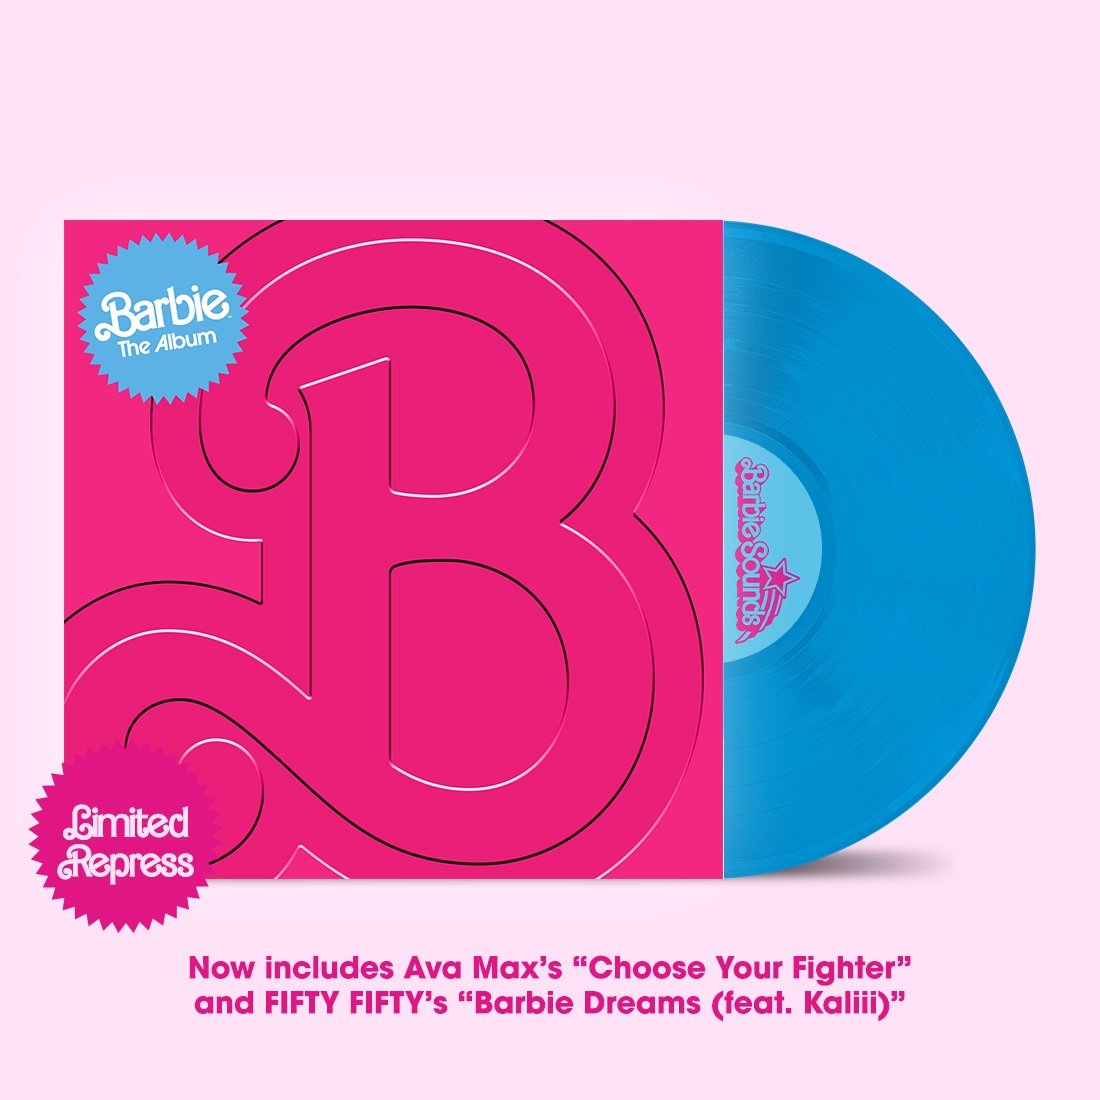 Sky Blue Vinyl (Limited Edition Repress)